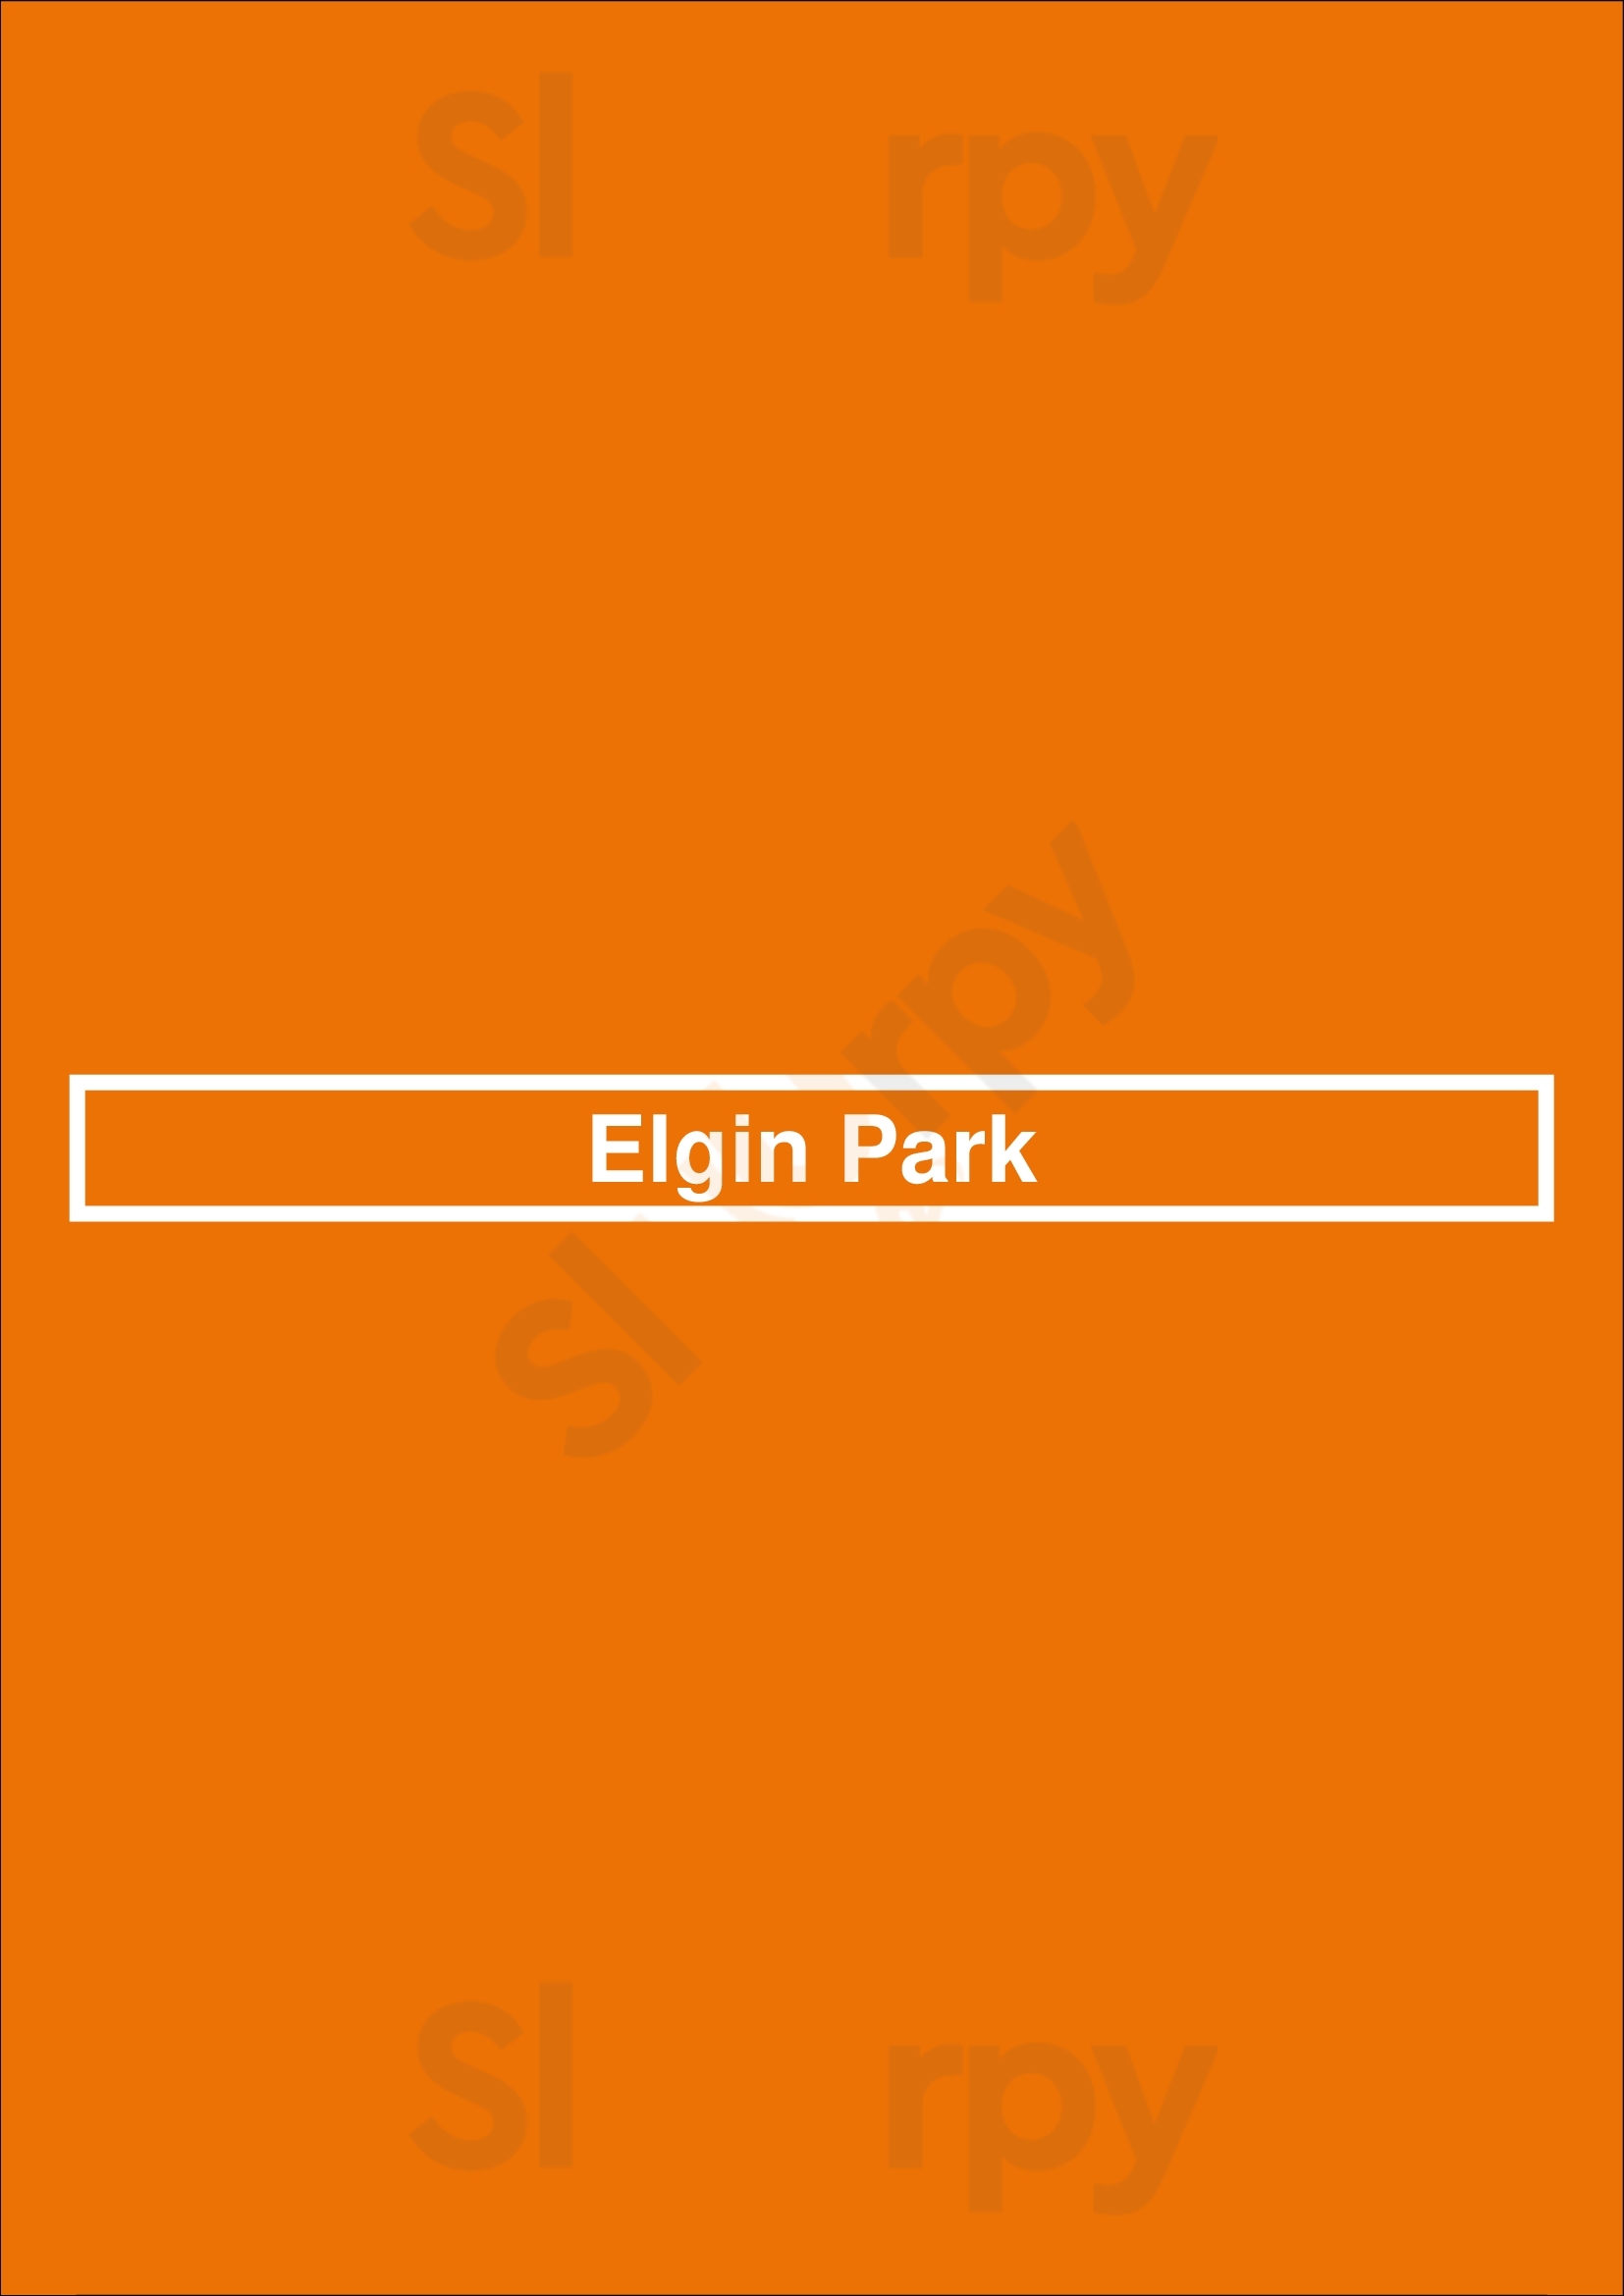 Elgin Park Tulsa Menu - 1